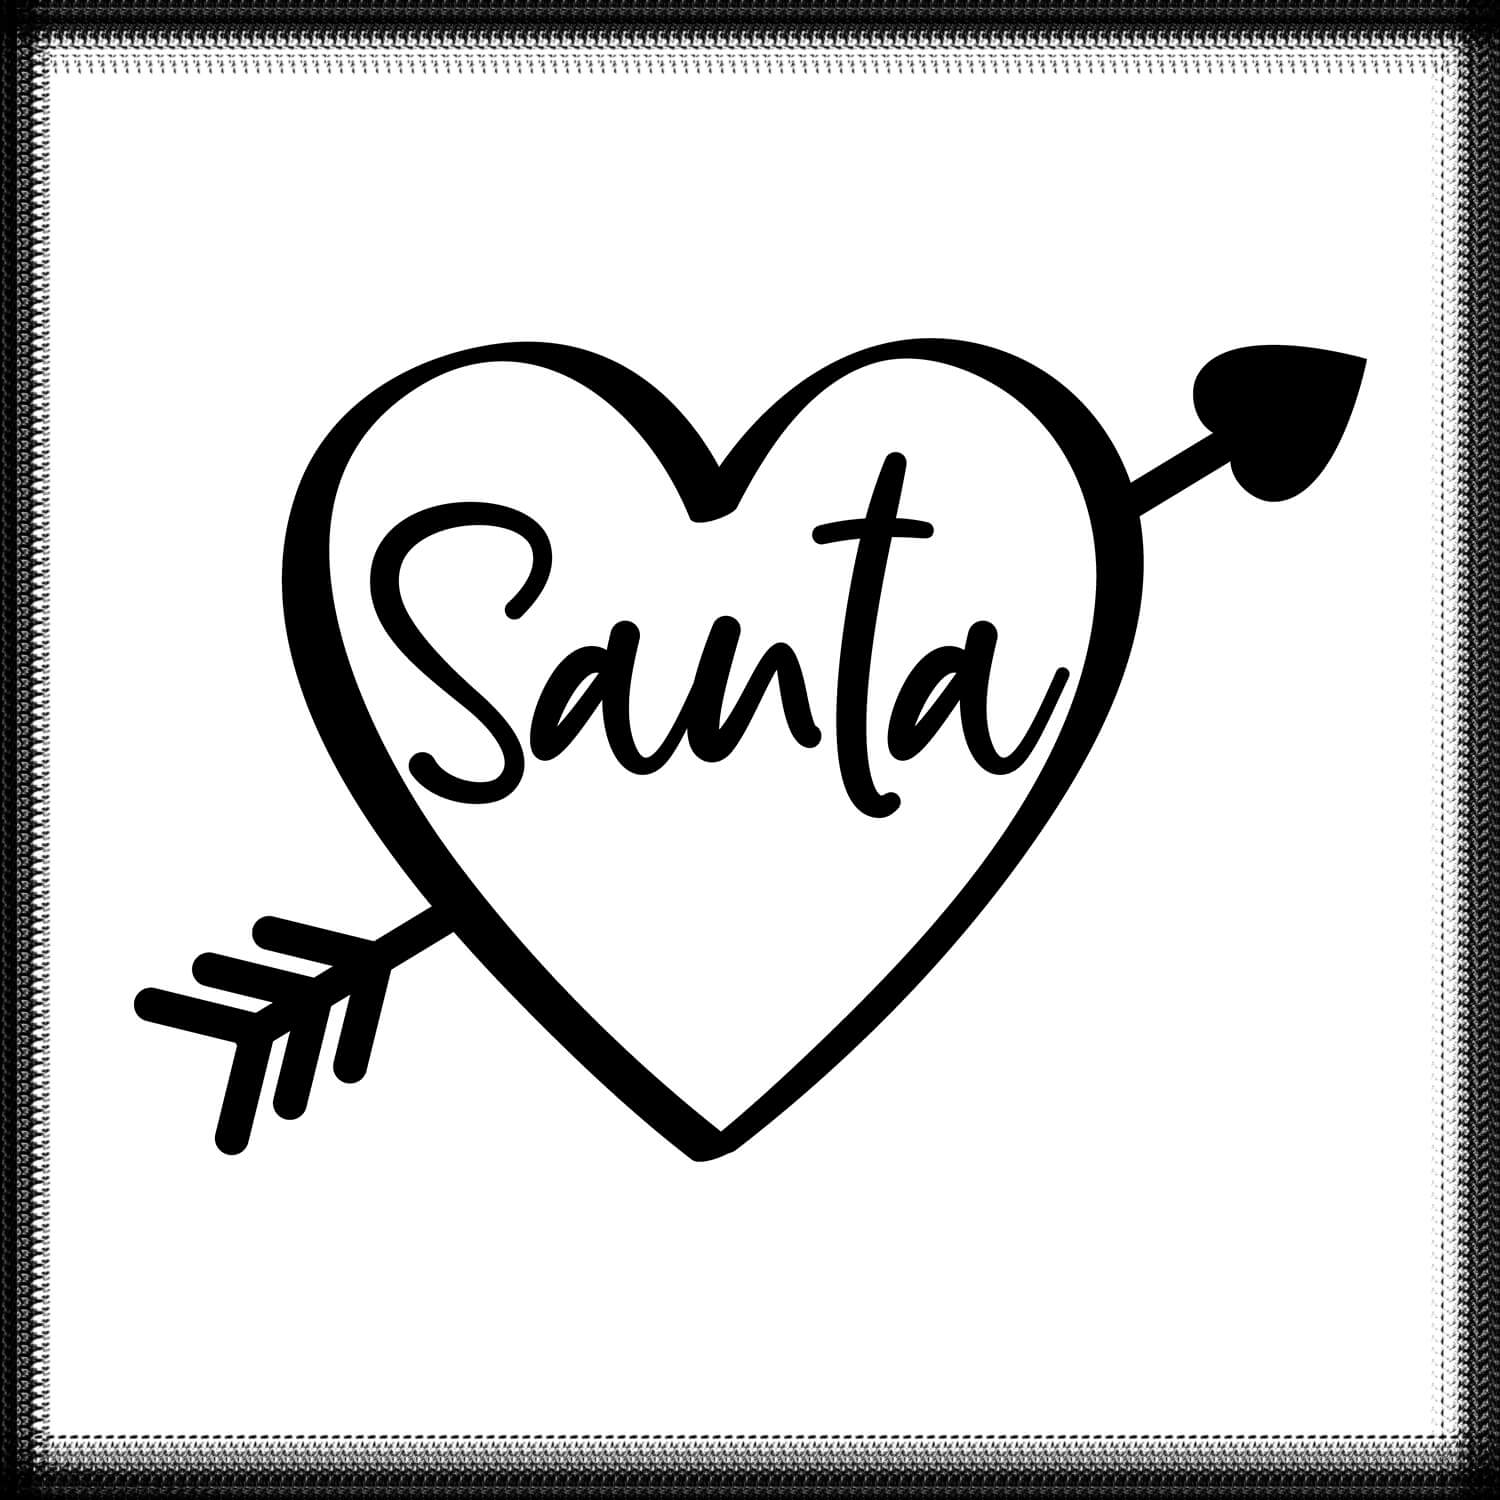 Santa love heart free SVG files cover image.